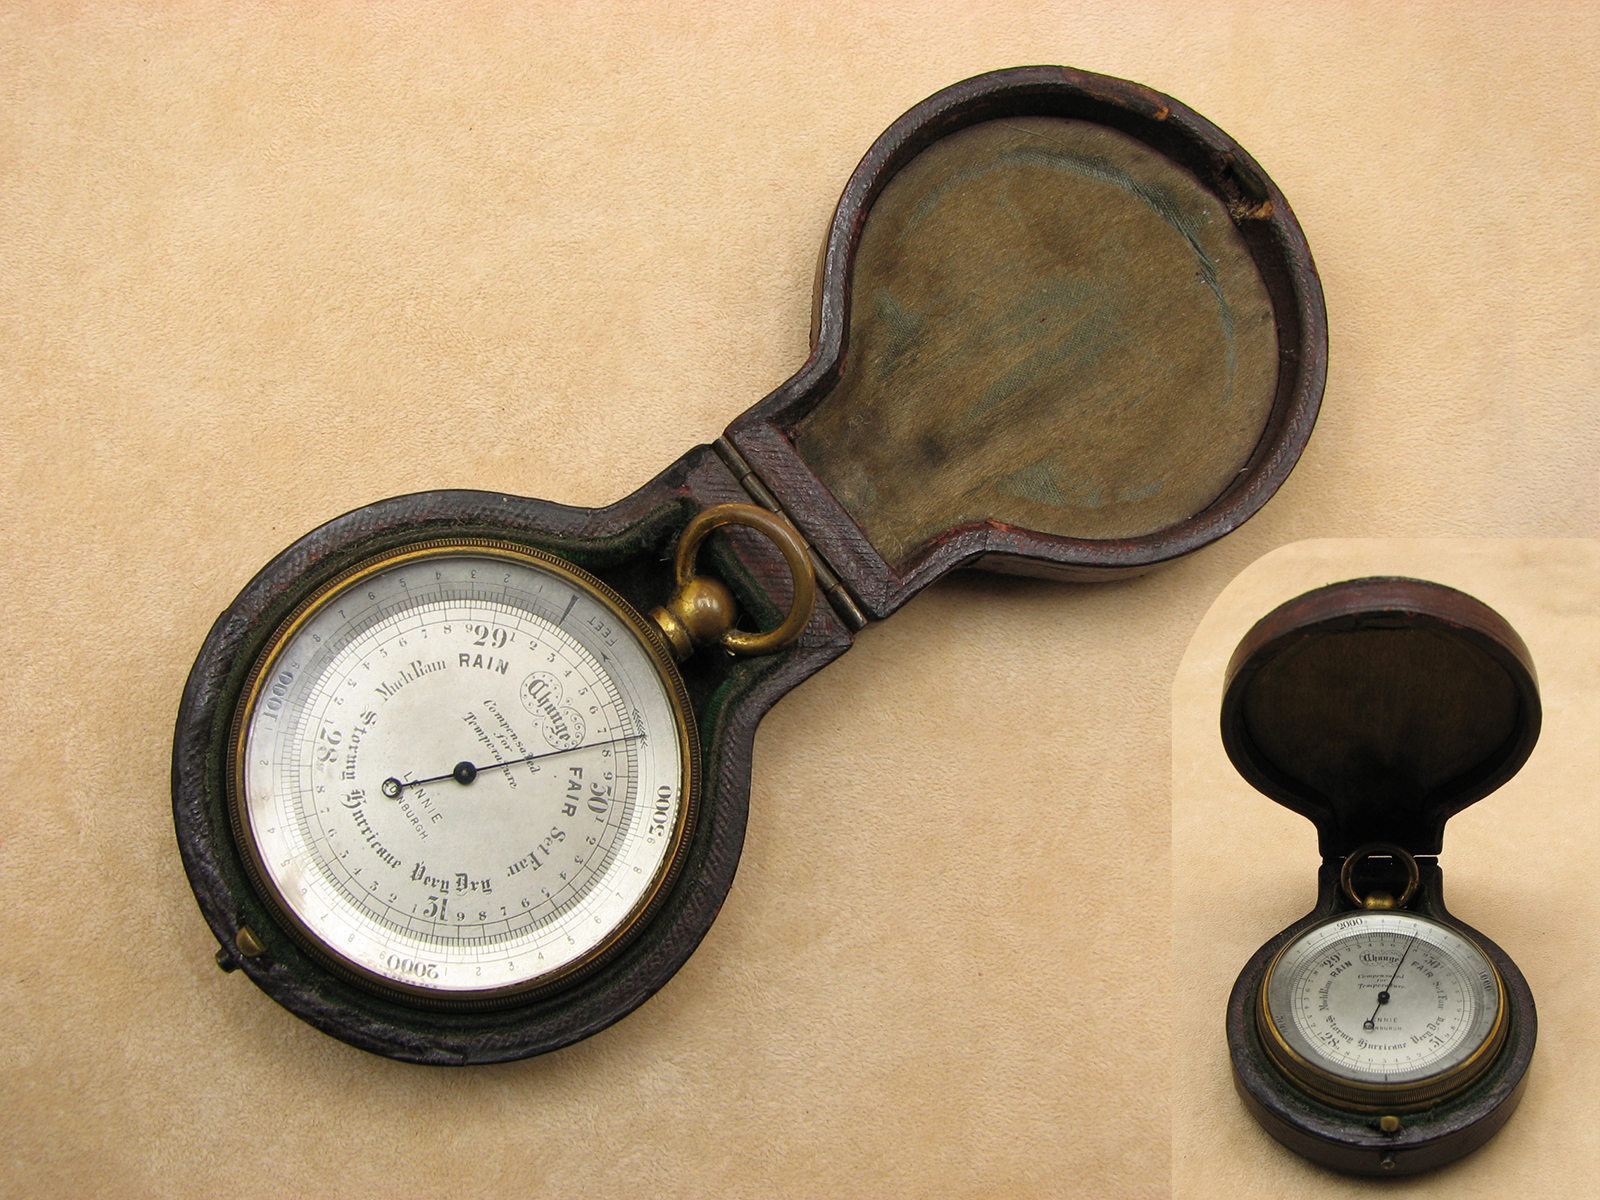 Rare pocket barometer with 'Hurricane' forecast,signed Lennie Edinburgh